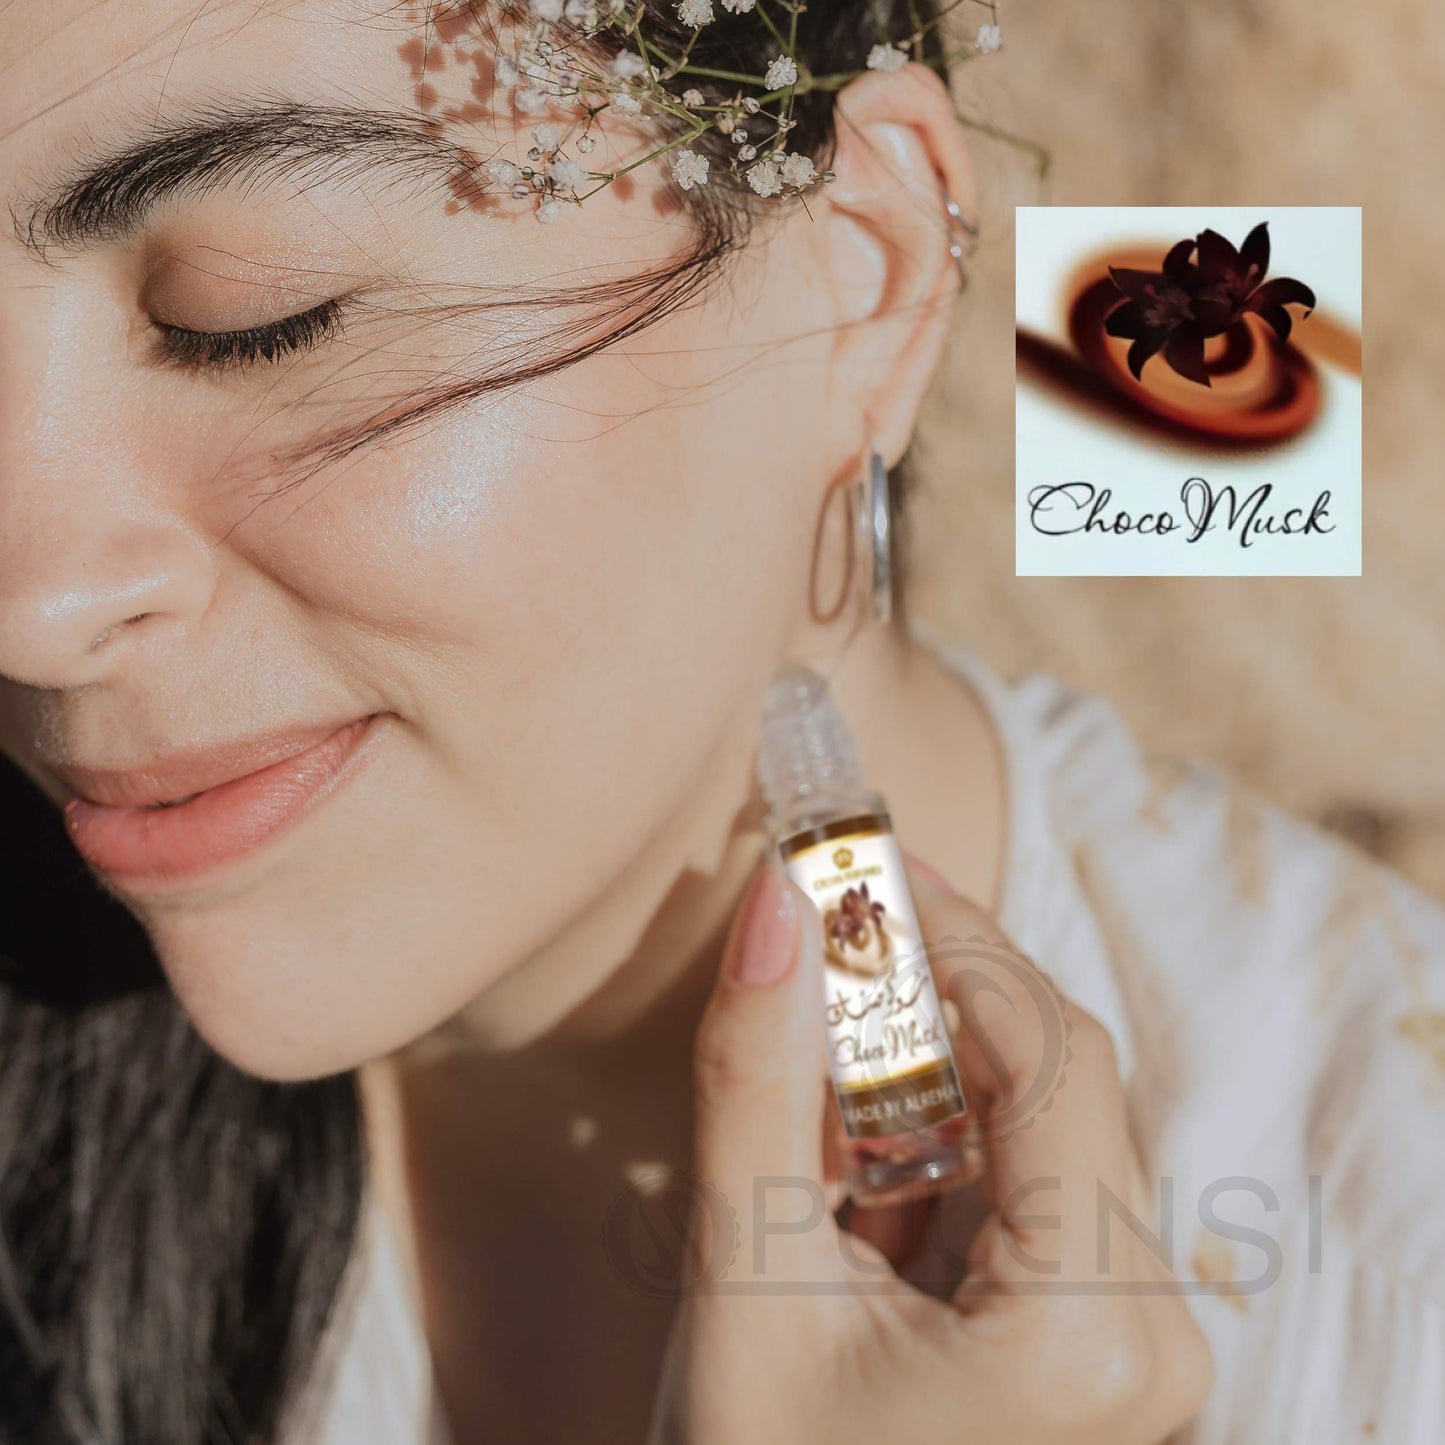 Choco Musk Roll On - 6 ml Perfume Oil attar By Al-Rehab (Crown Perfumes)